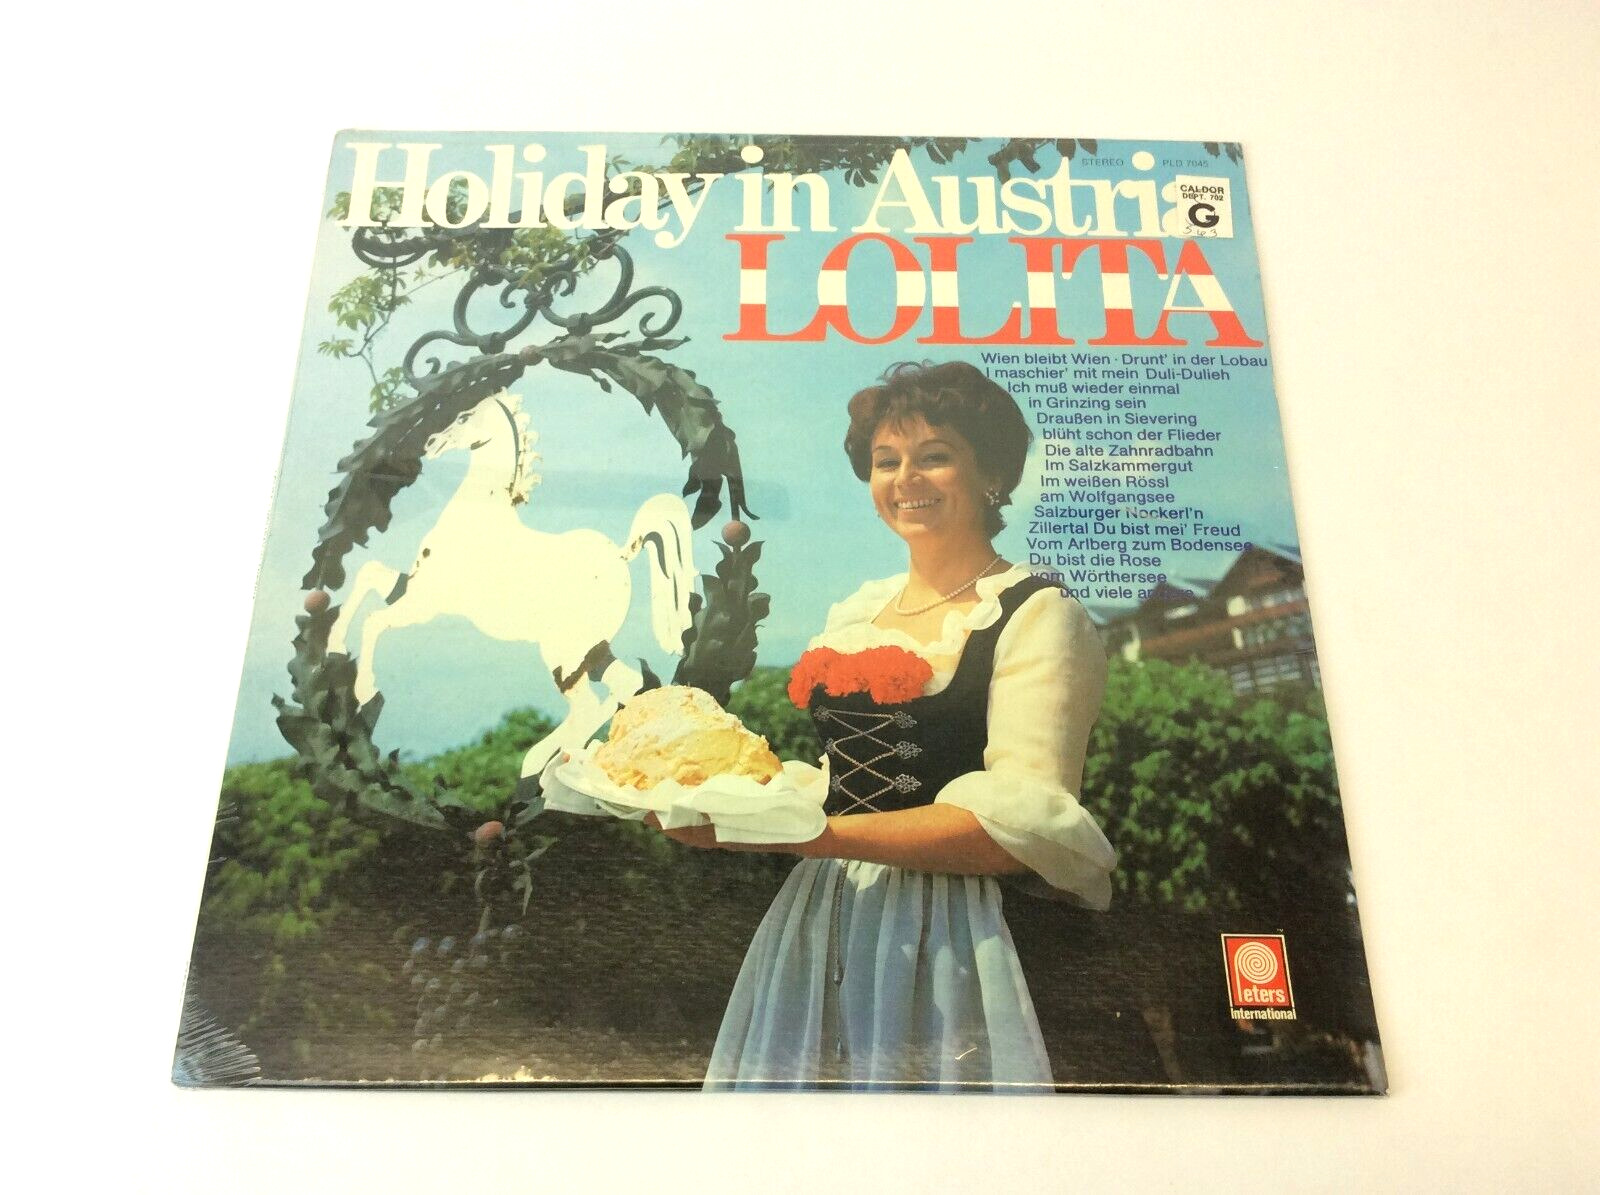 New 1977 Polydor Holiday in Austria Lolita PLD 7045 Vinyl Record